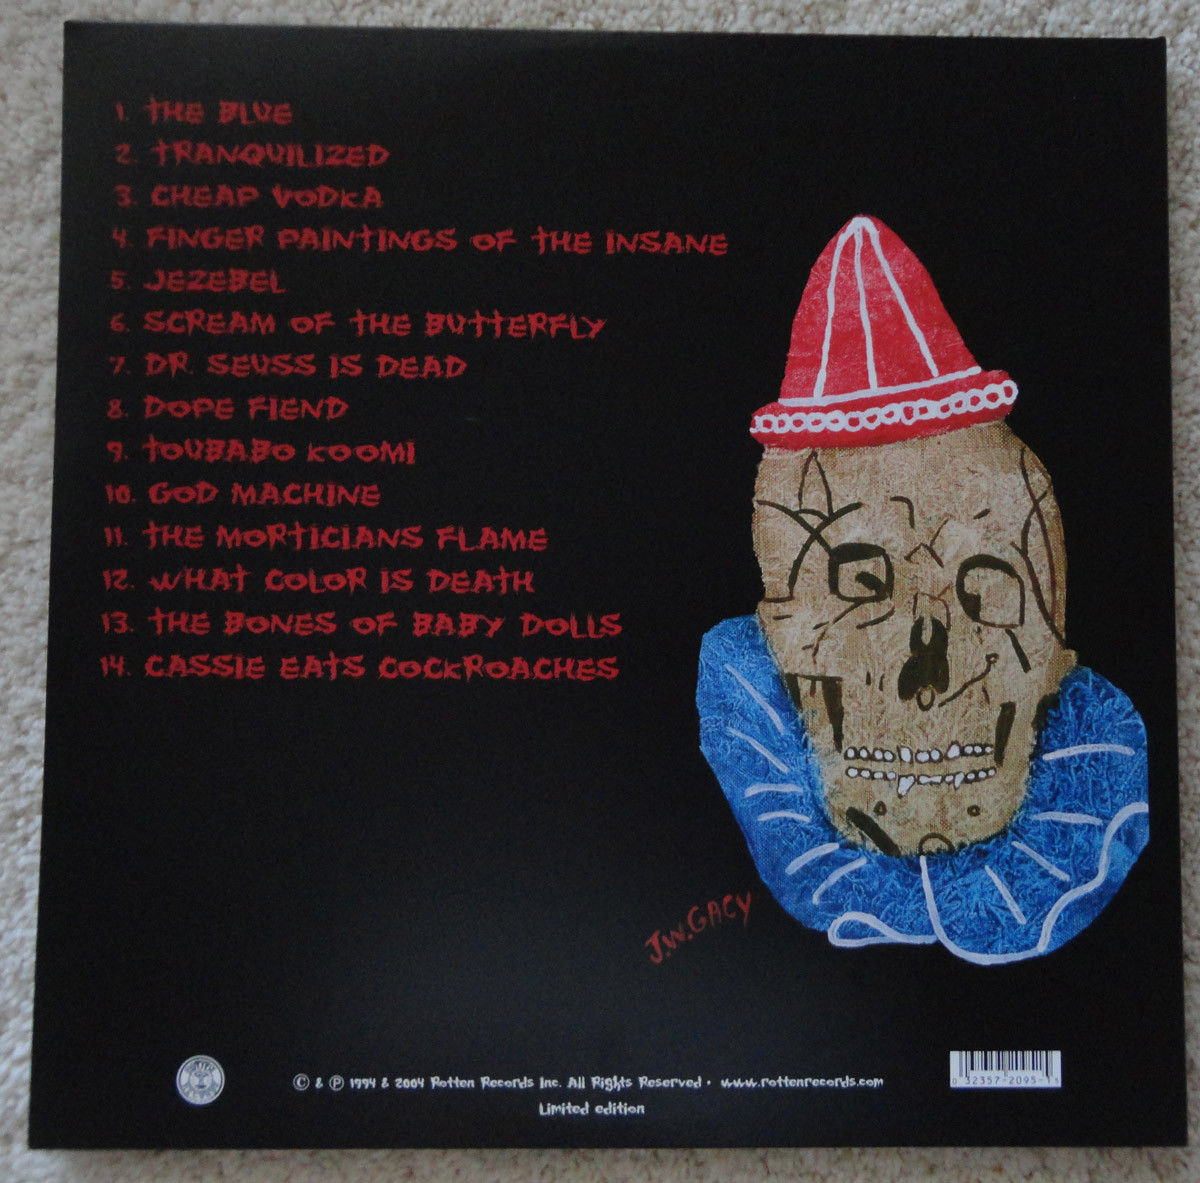 Acid Bath When The Kite String Pops Lp Color Vinyl Rotten Records Store.